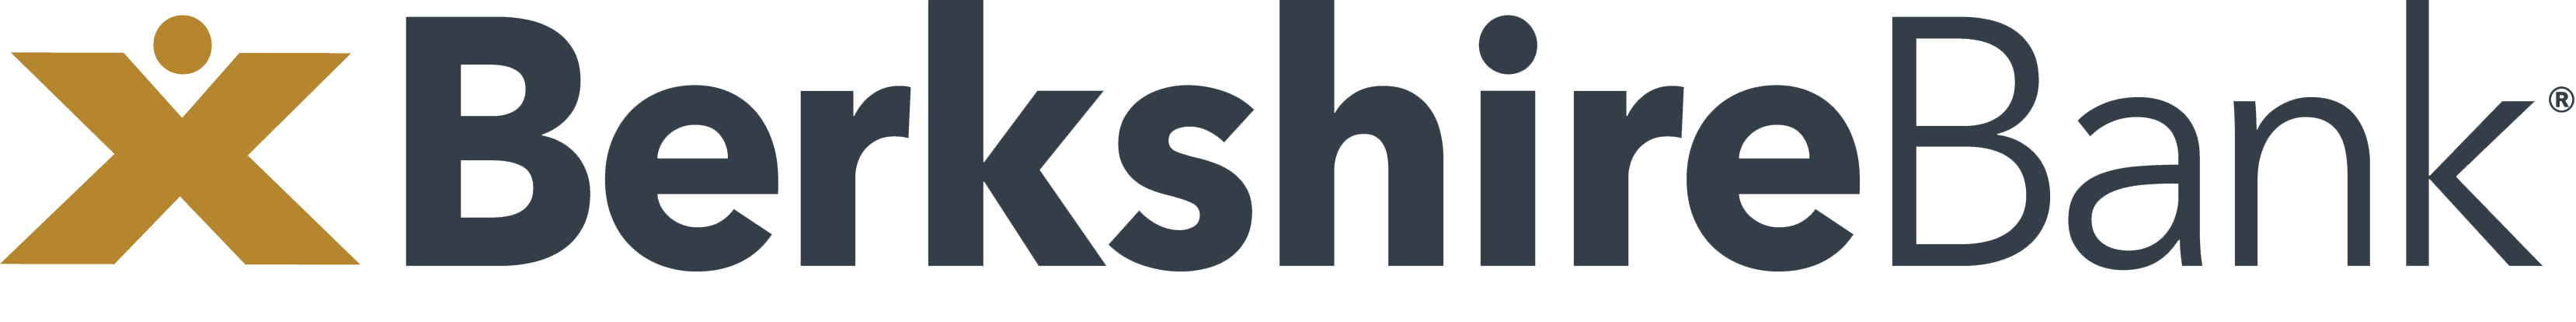 Berkshire-Bank-logo